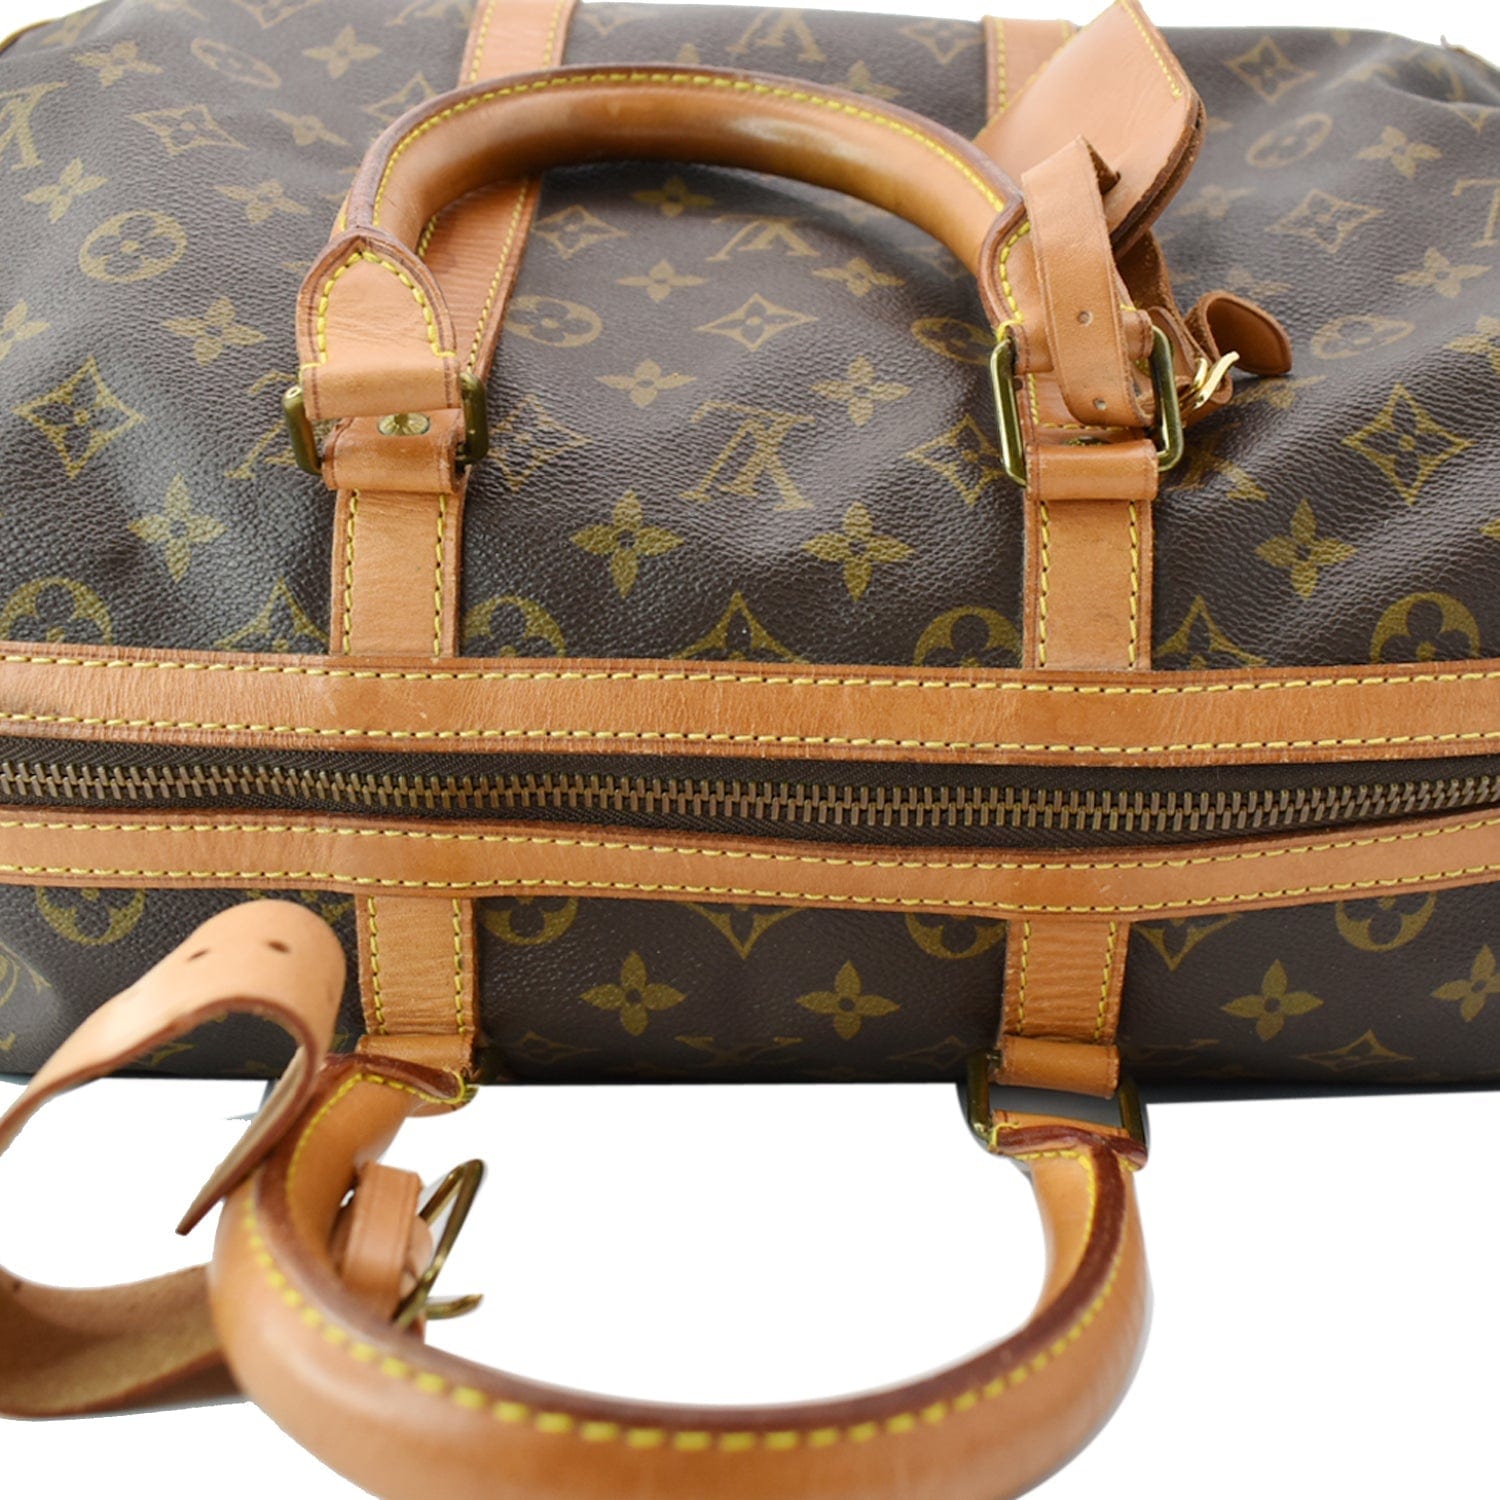 Louis Vuitton Monogram Sac Sport Boston Duffle Carry-On Luggage 861106